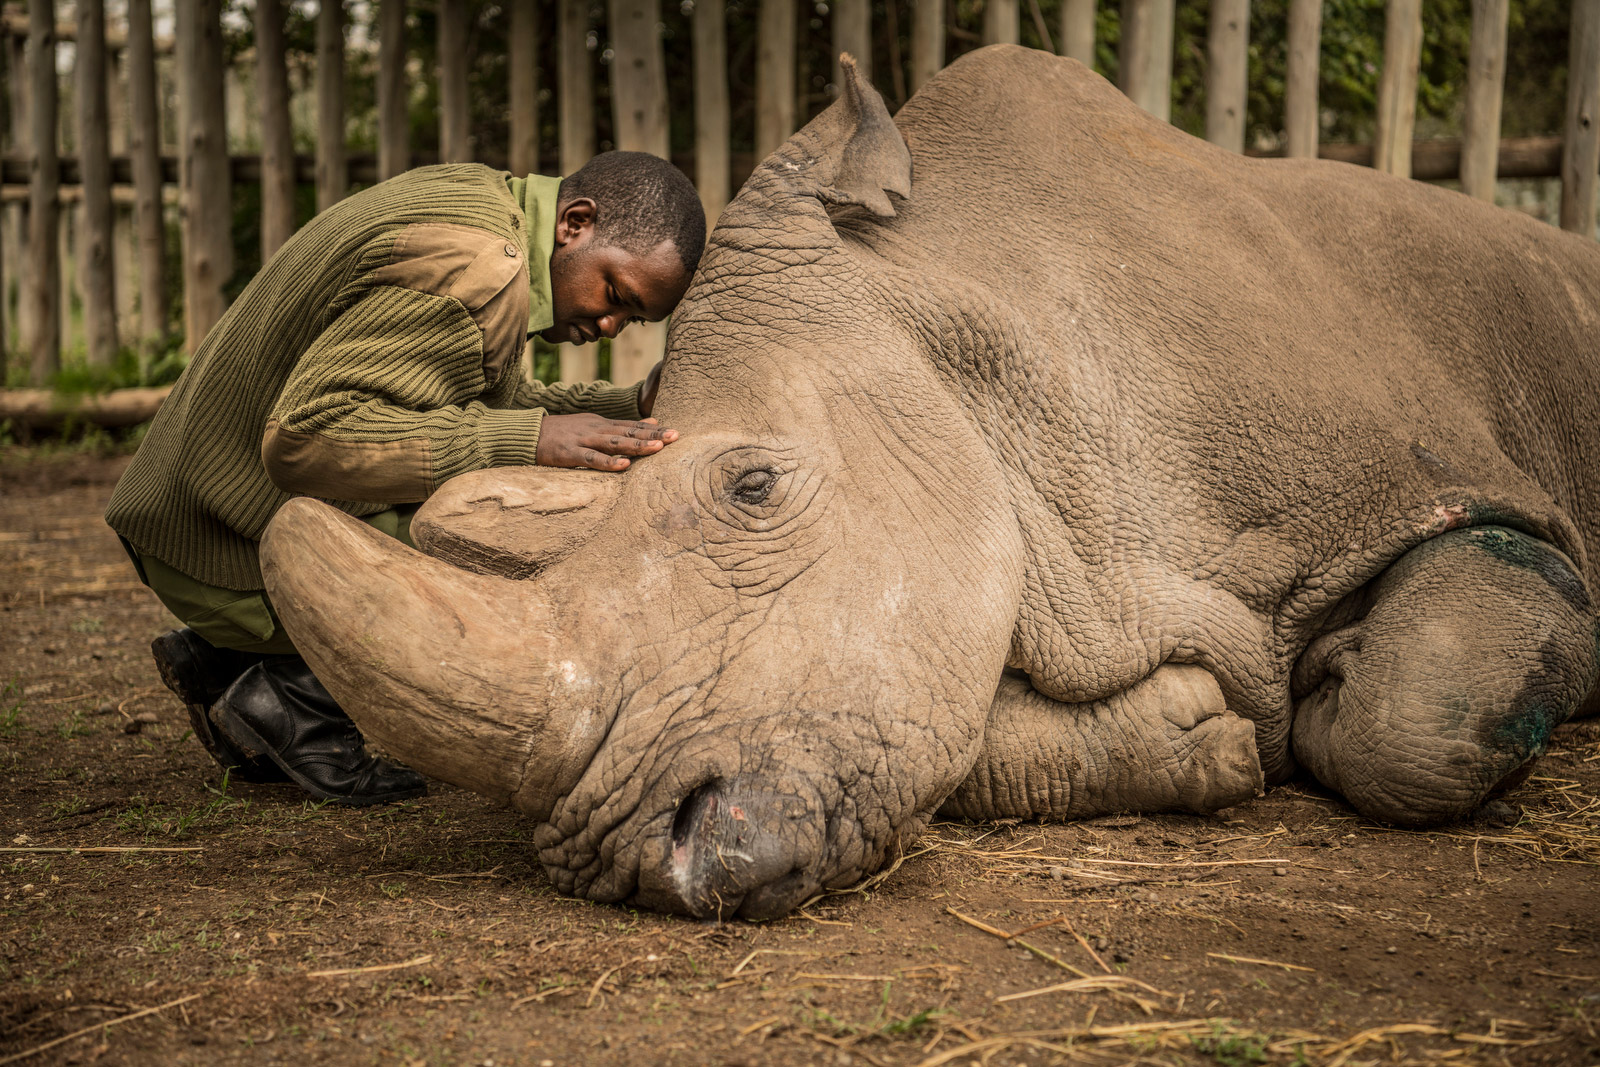 Joseph Wachira comforts Sudan, a northern white rhino, moments before he died Monday at the Ol Pejeta Conservancy in Kenya.